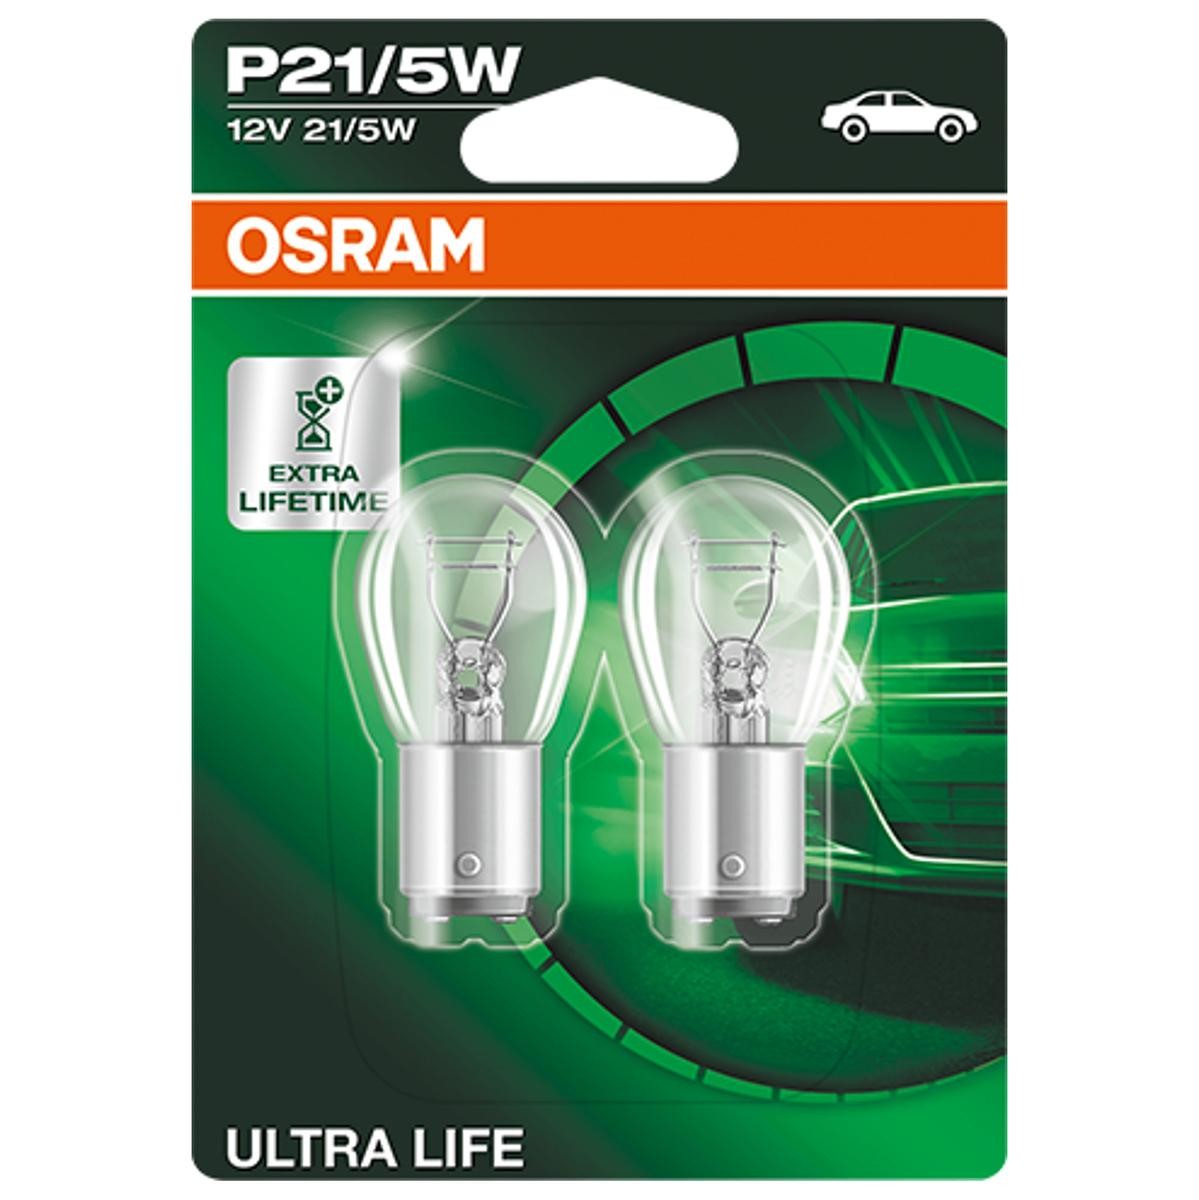 OSRAM ORIGINAL LINE 921 Ampoule, feu clignotant